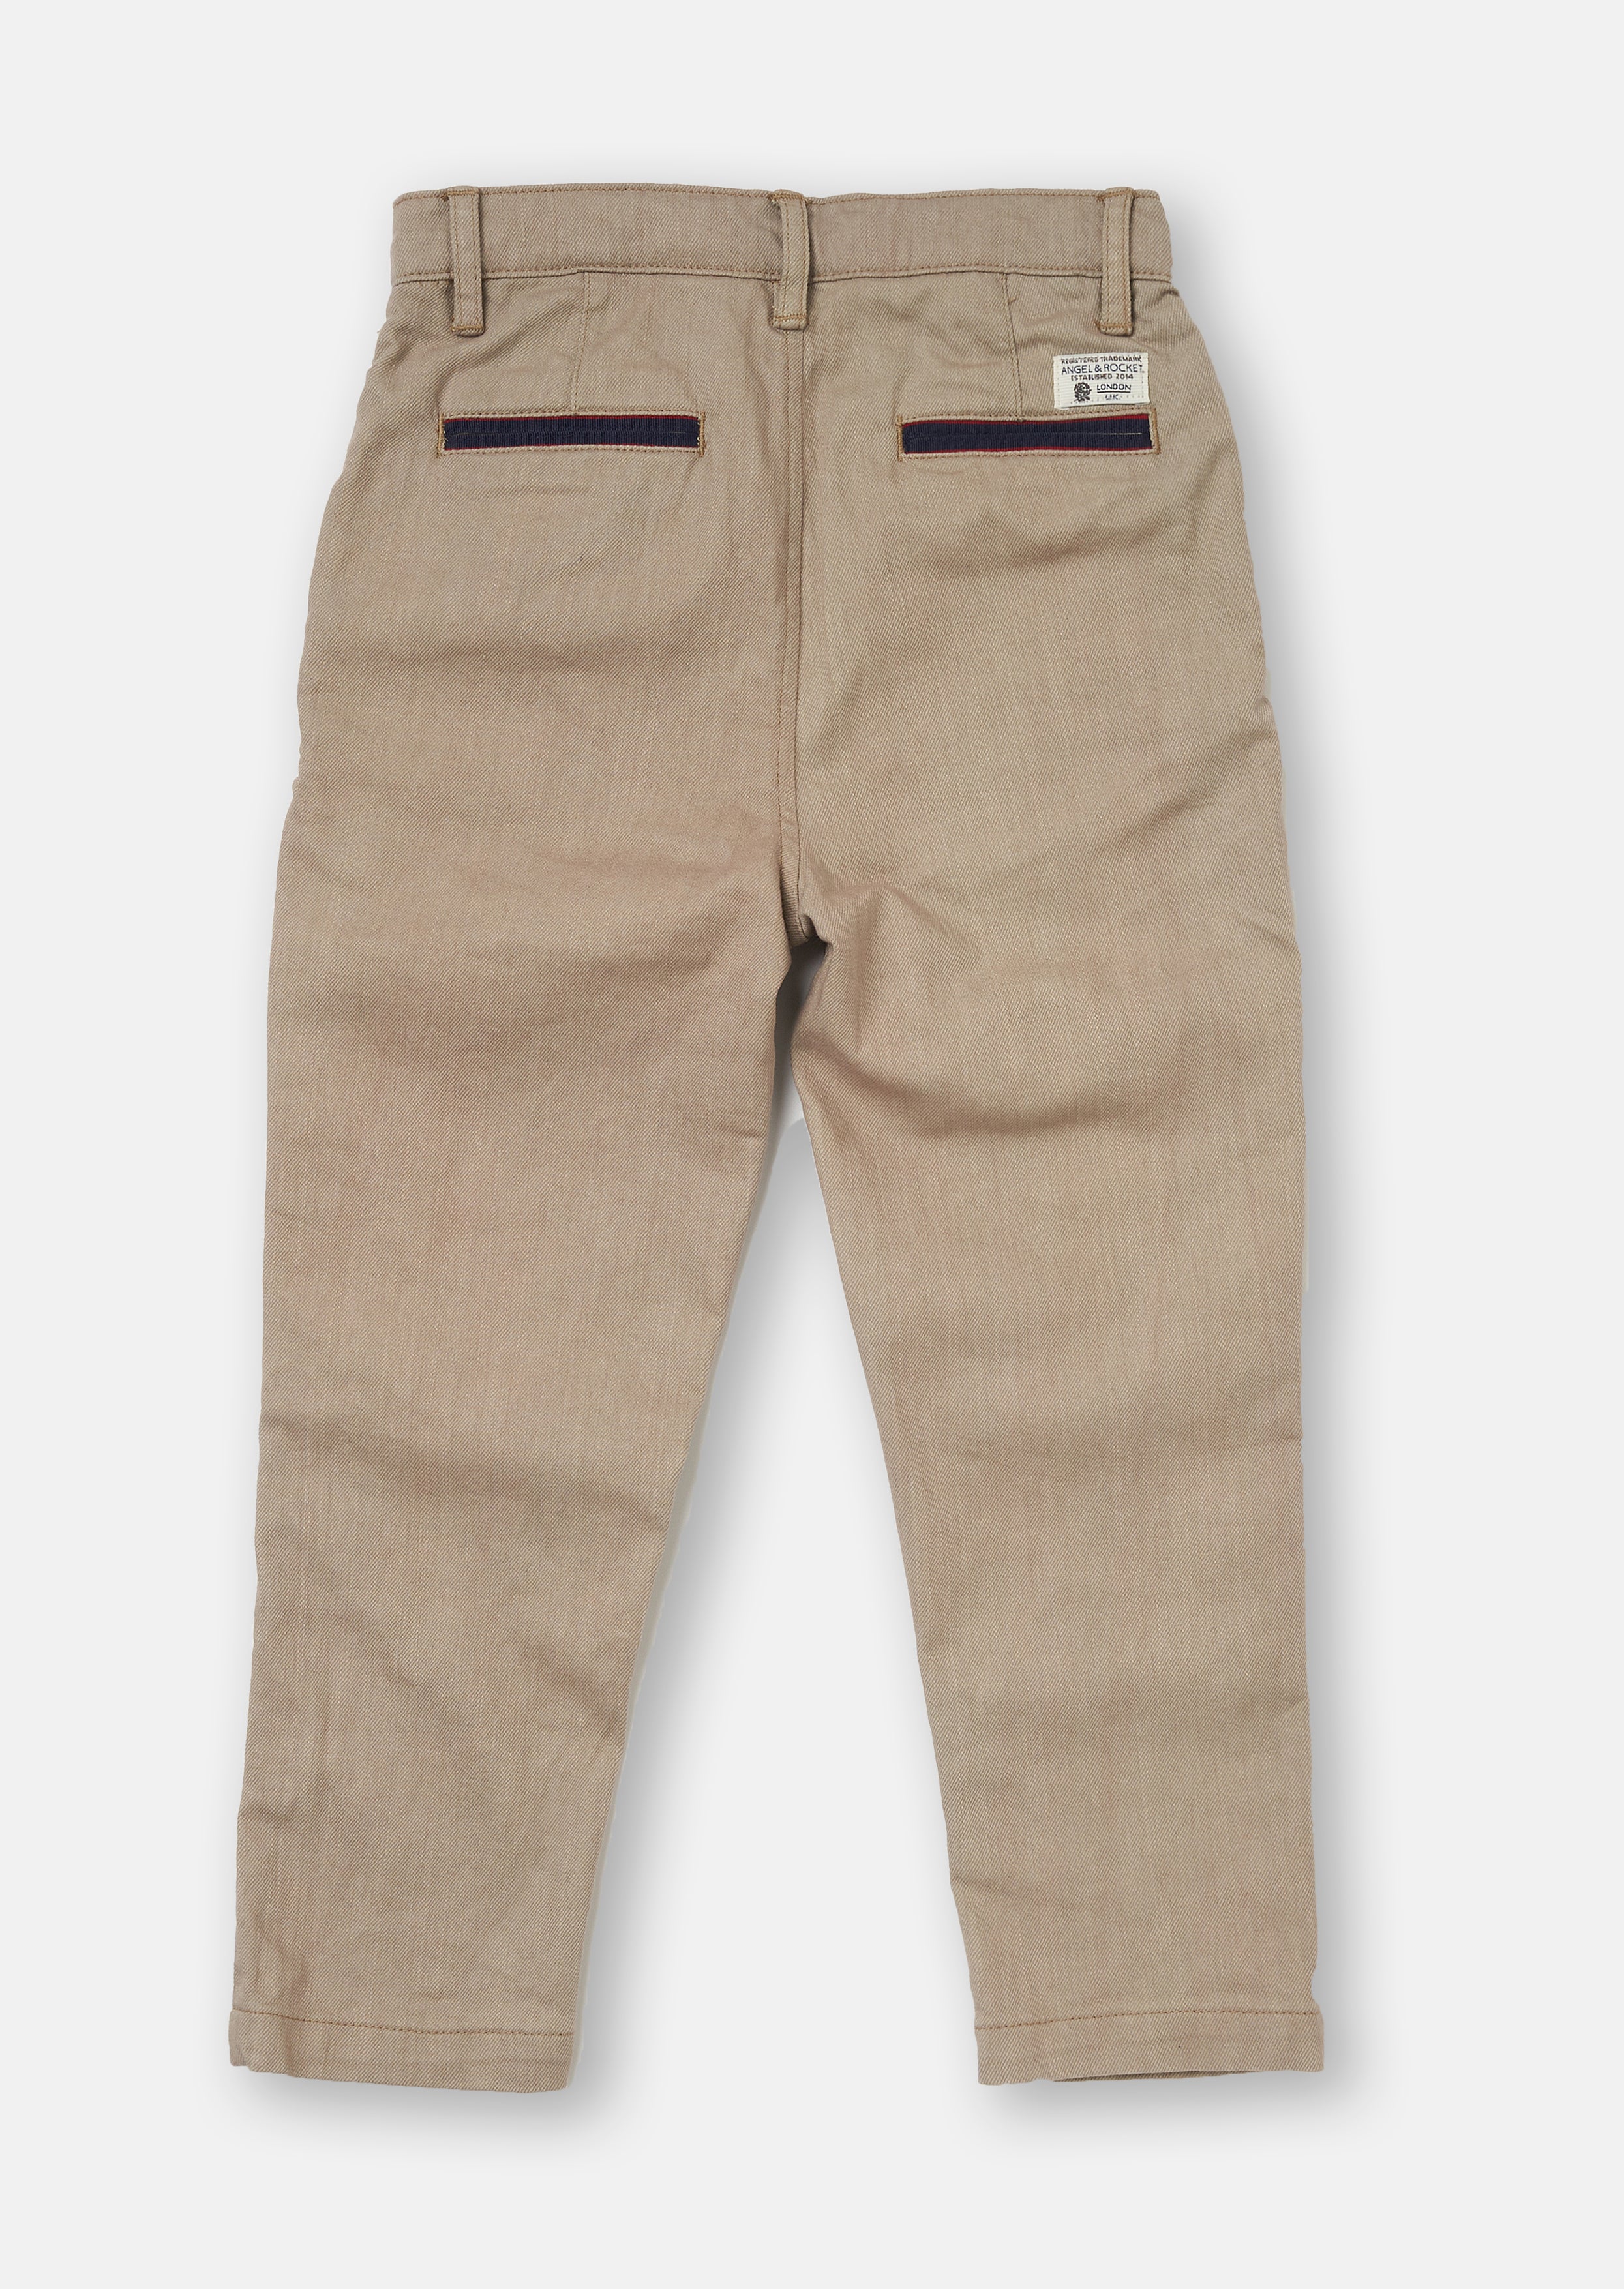 Boys Smart Cotton Brown Pants